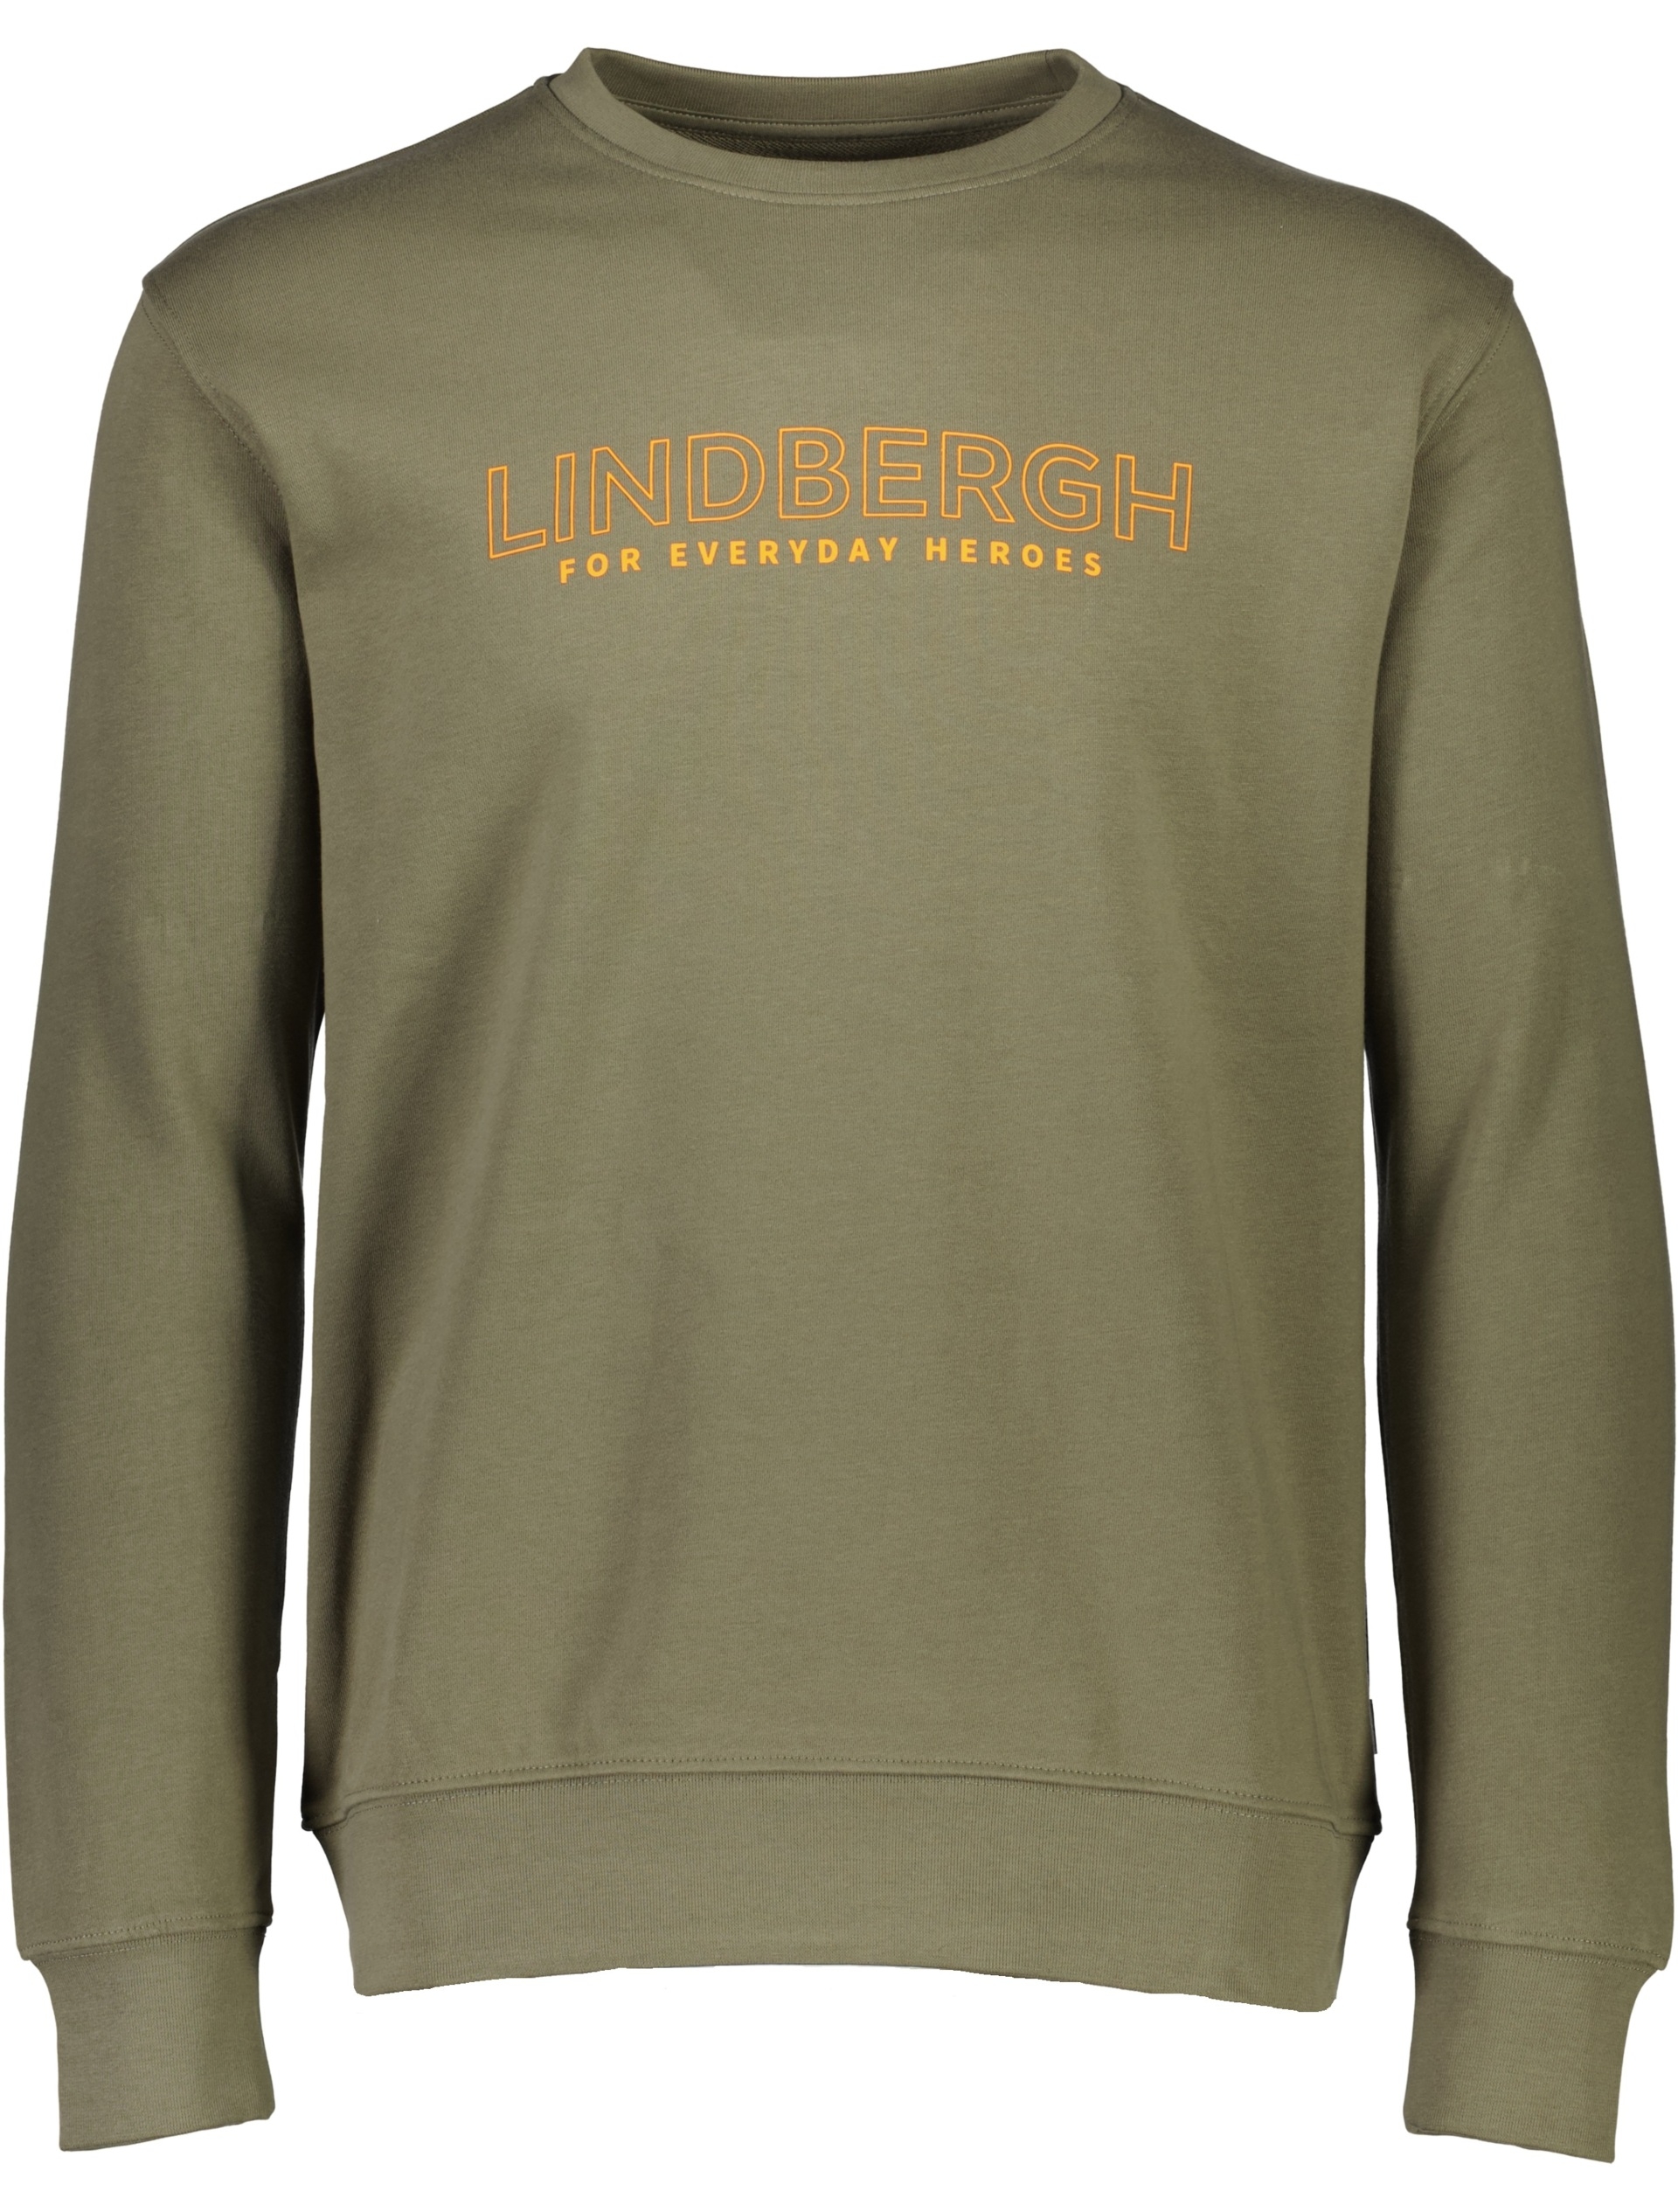 Lindbergh Sweater groen / army